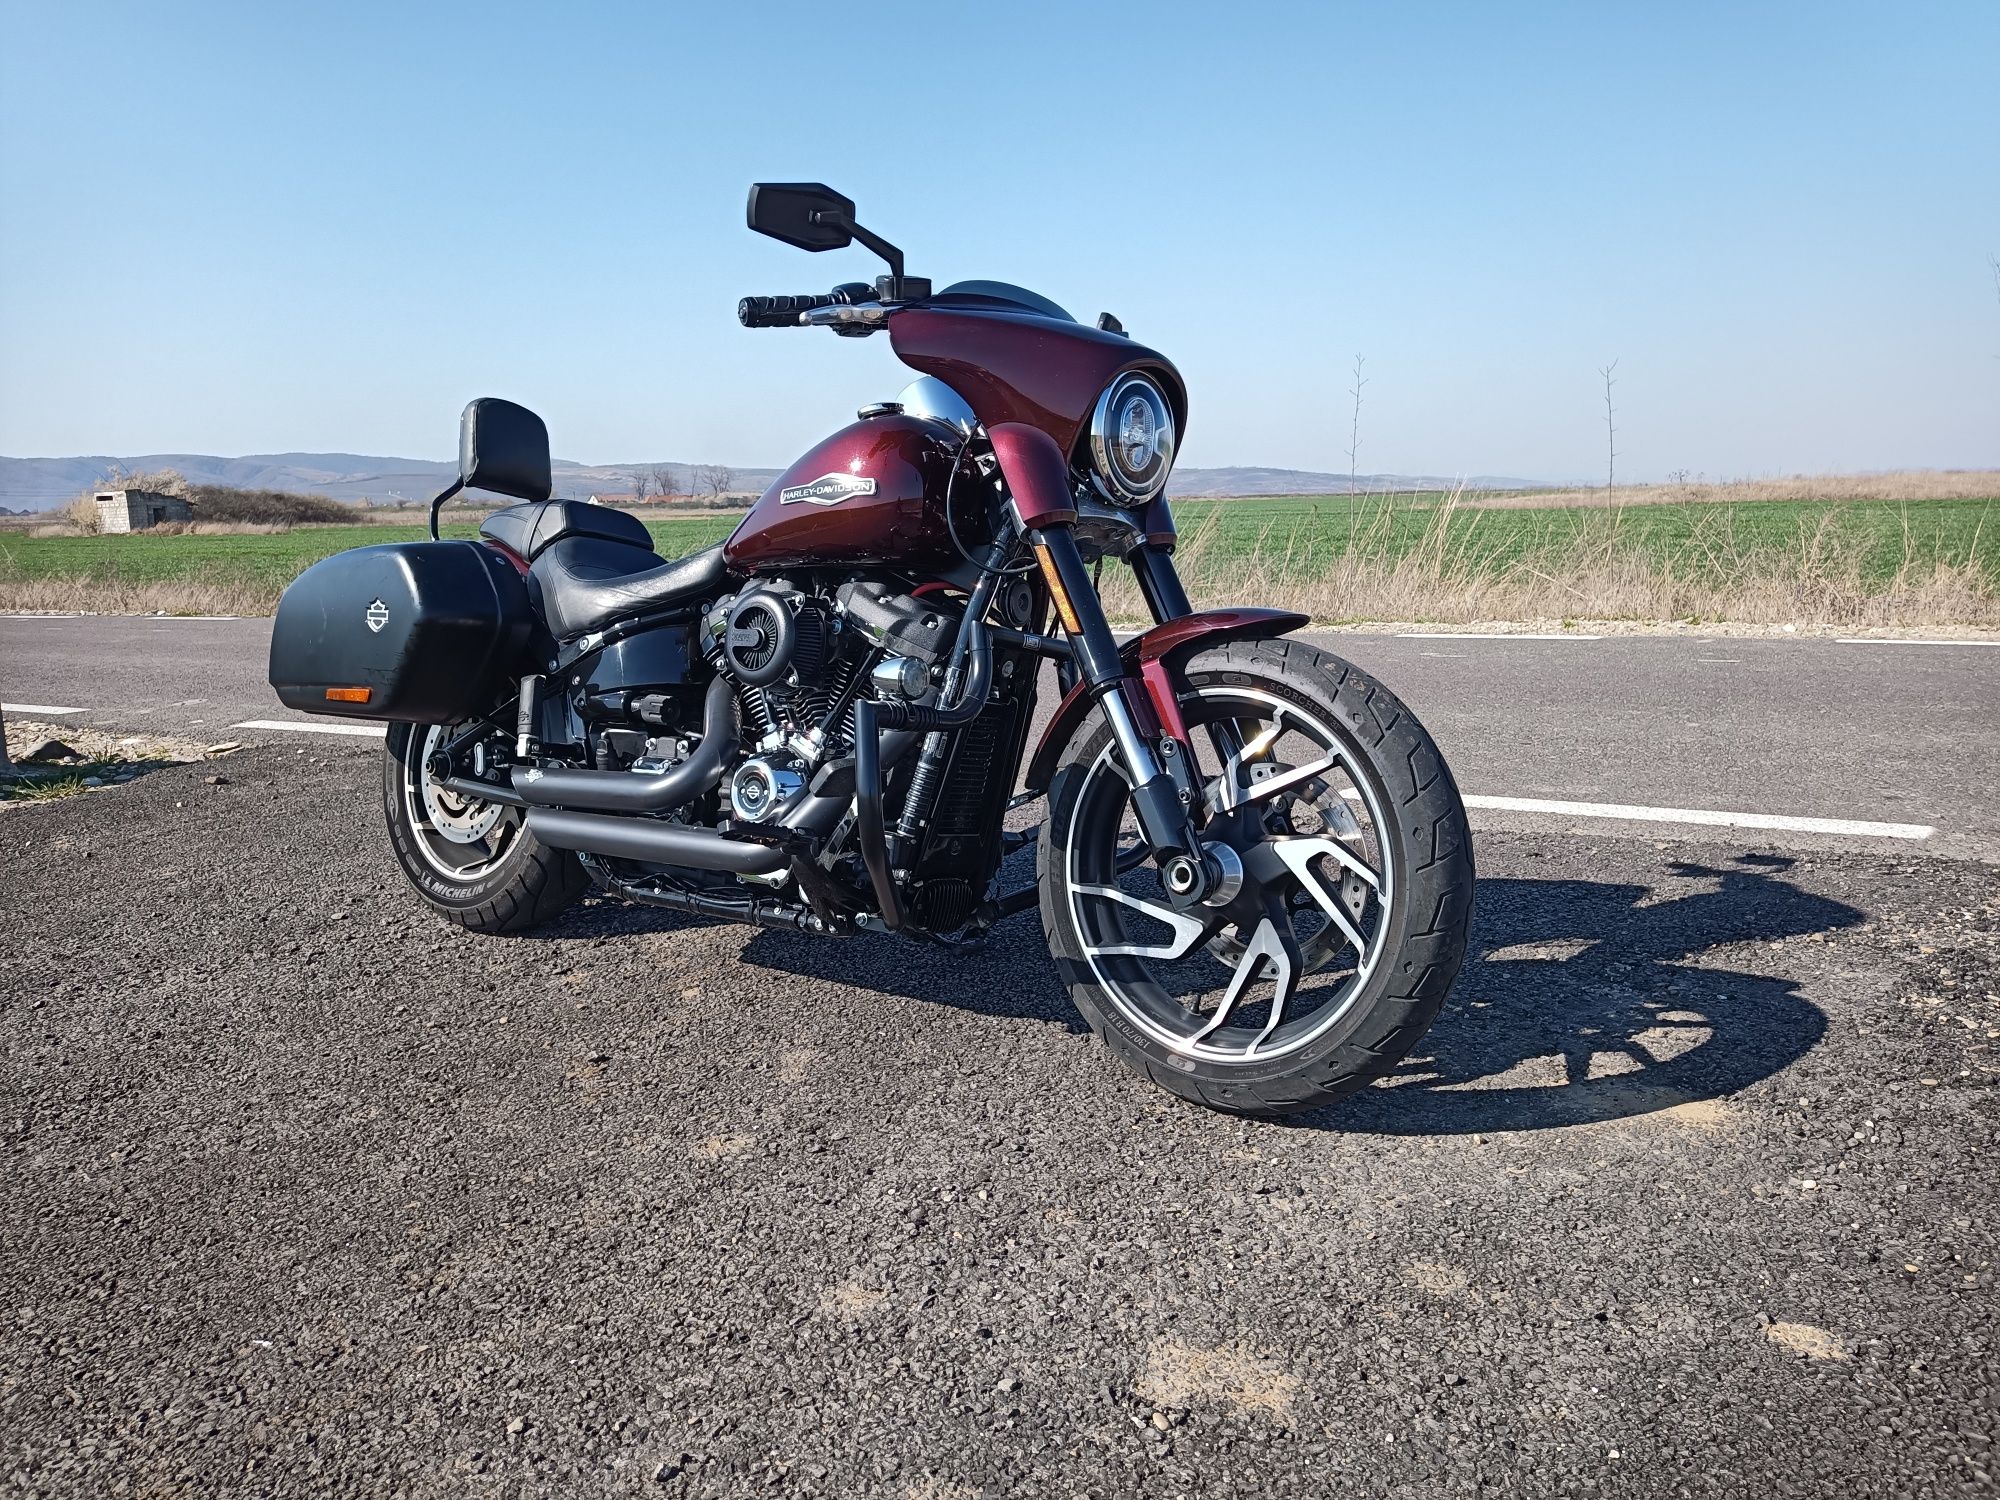 Cel mai puternic Harley Davidson cu M8 107 stage 2+